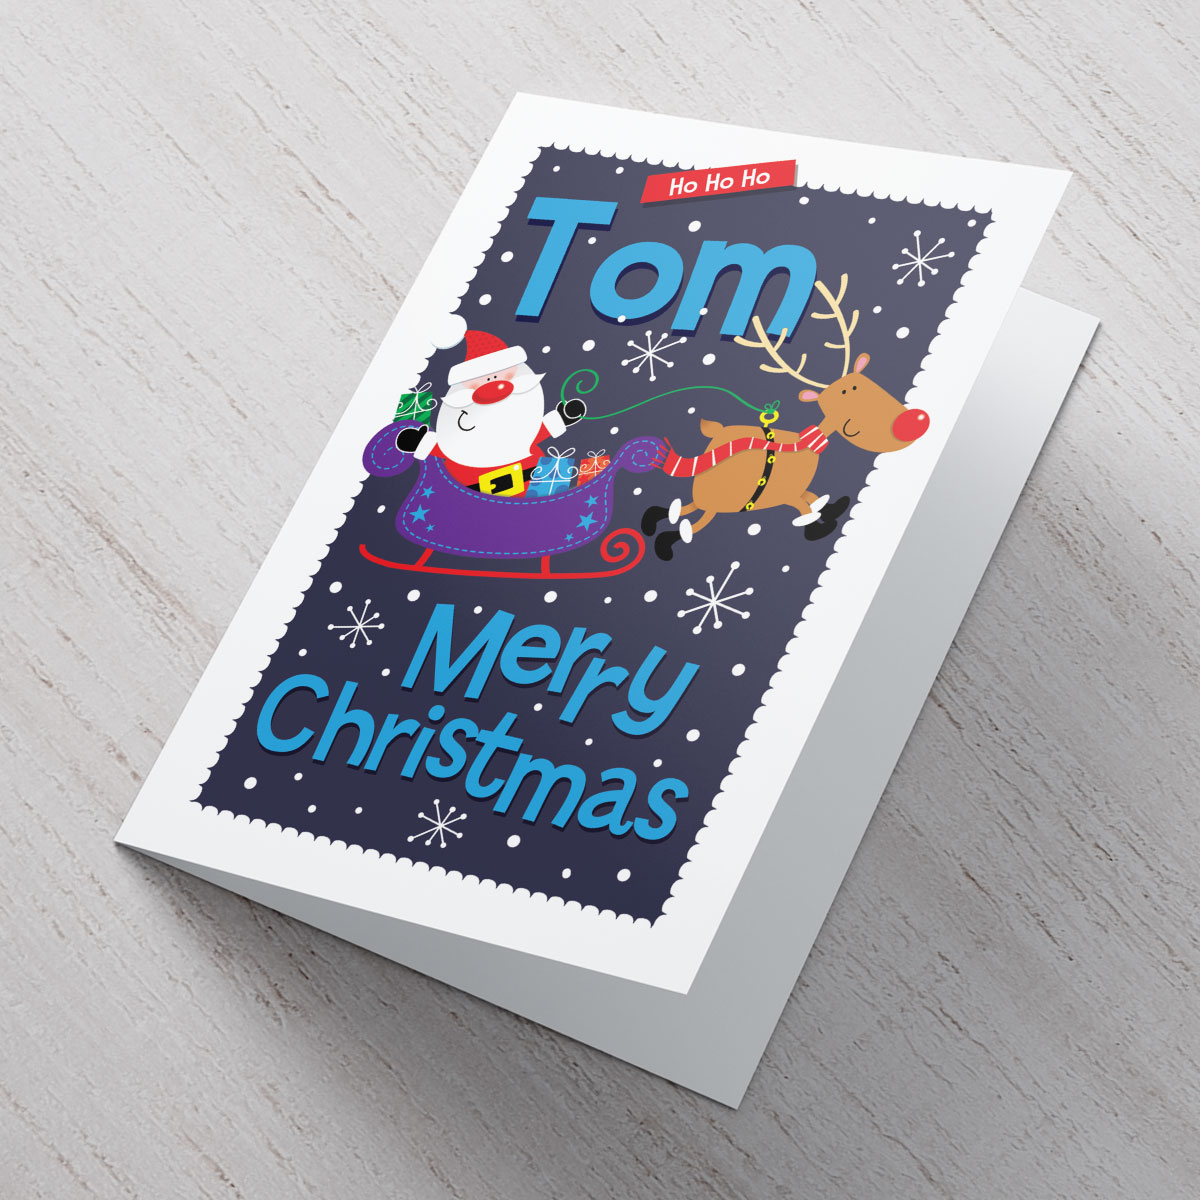 Personalised Christmas Card - Santa's Sleigh